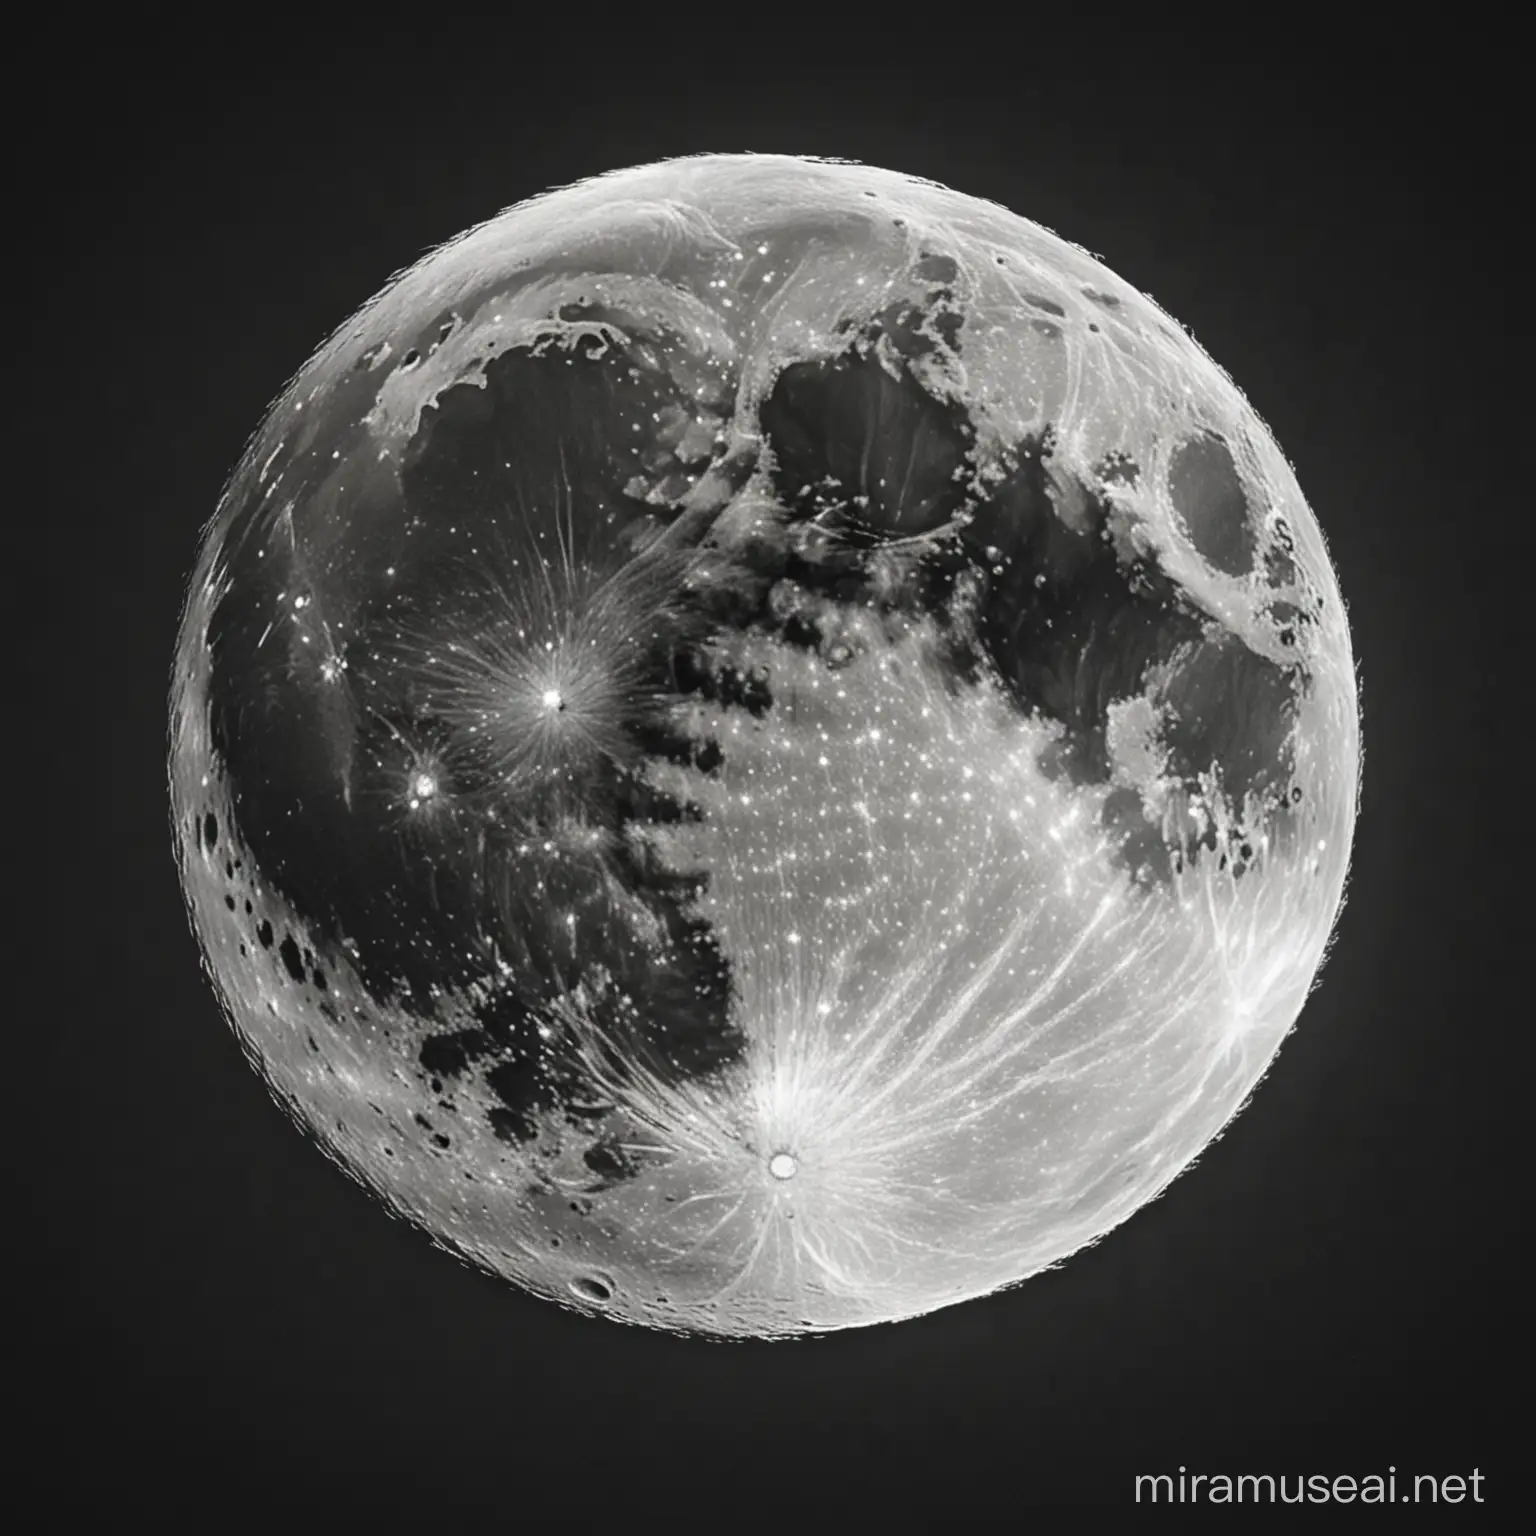 Monochrome Full Moon in a Minimalist Setting